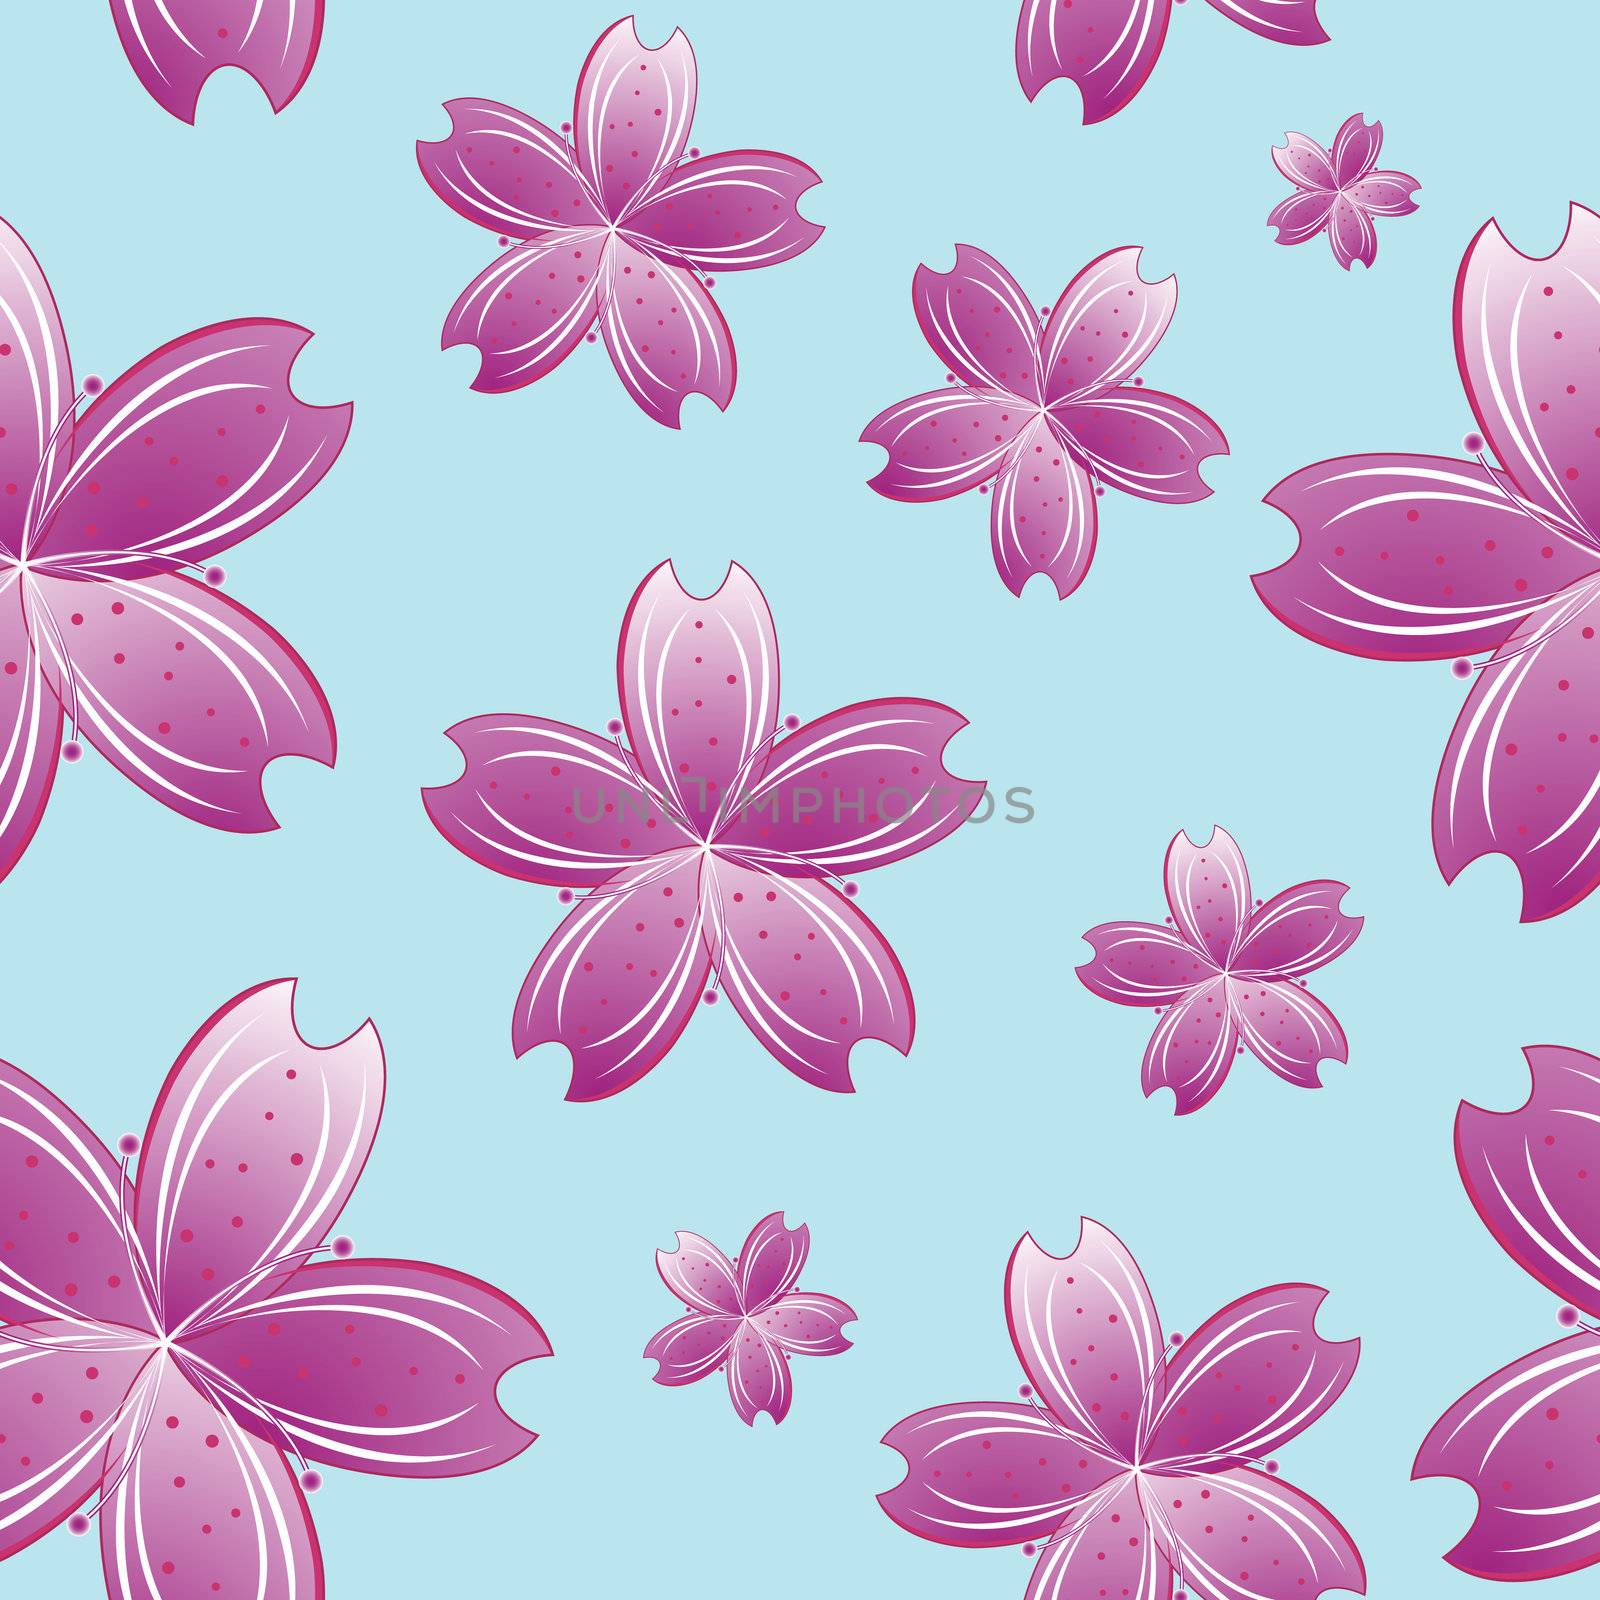 flowers seamless pattern by robertosch